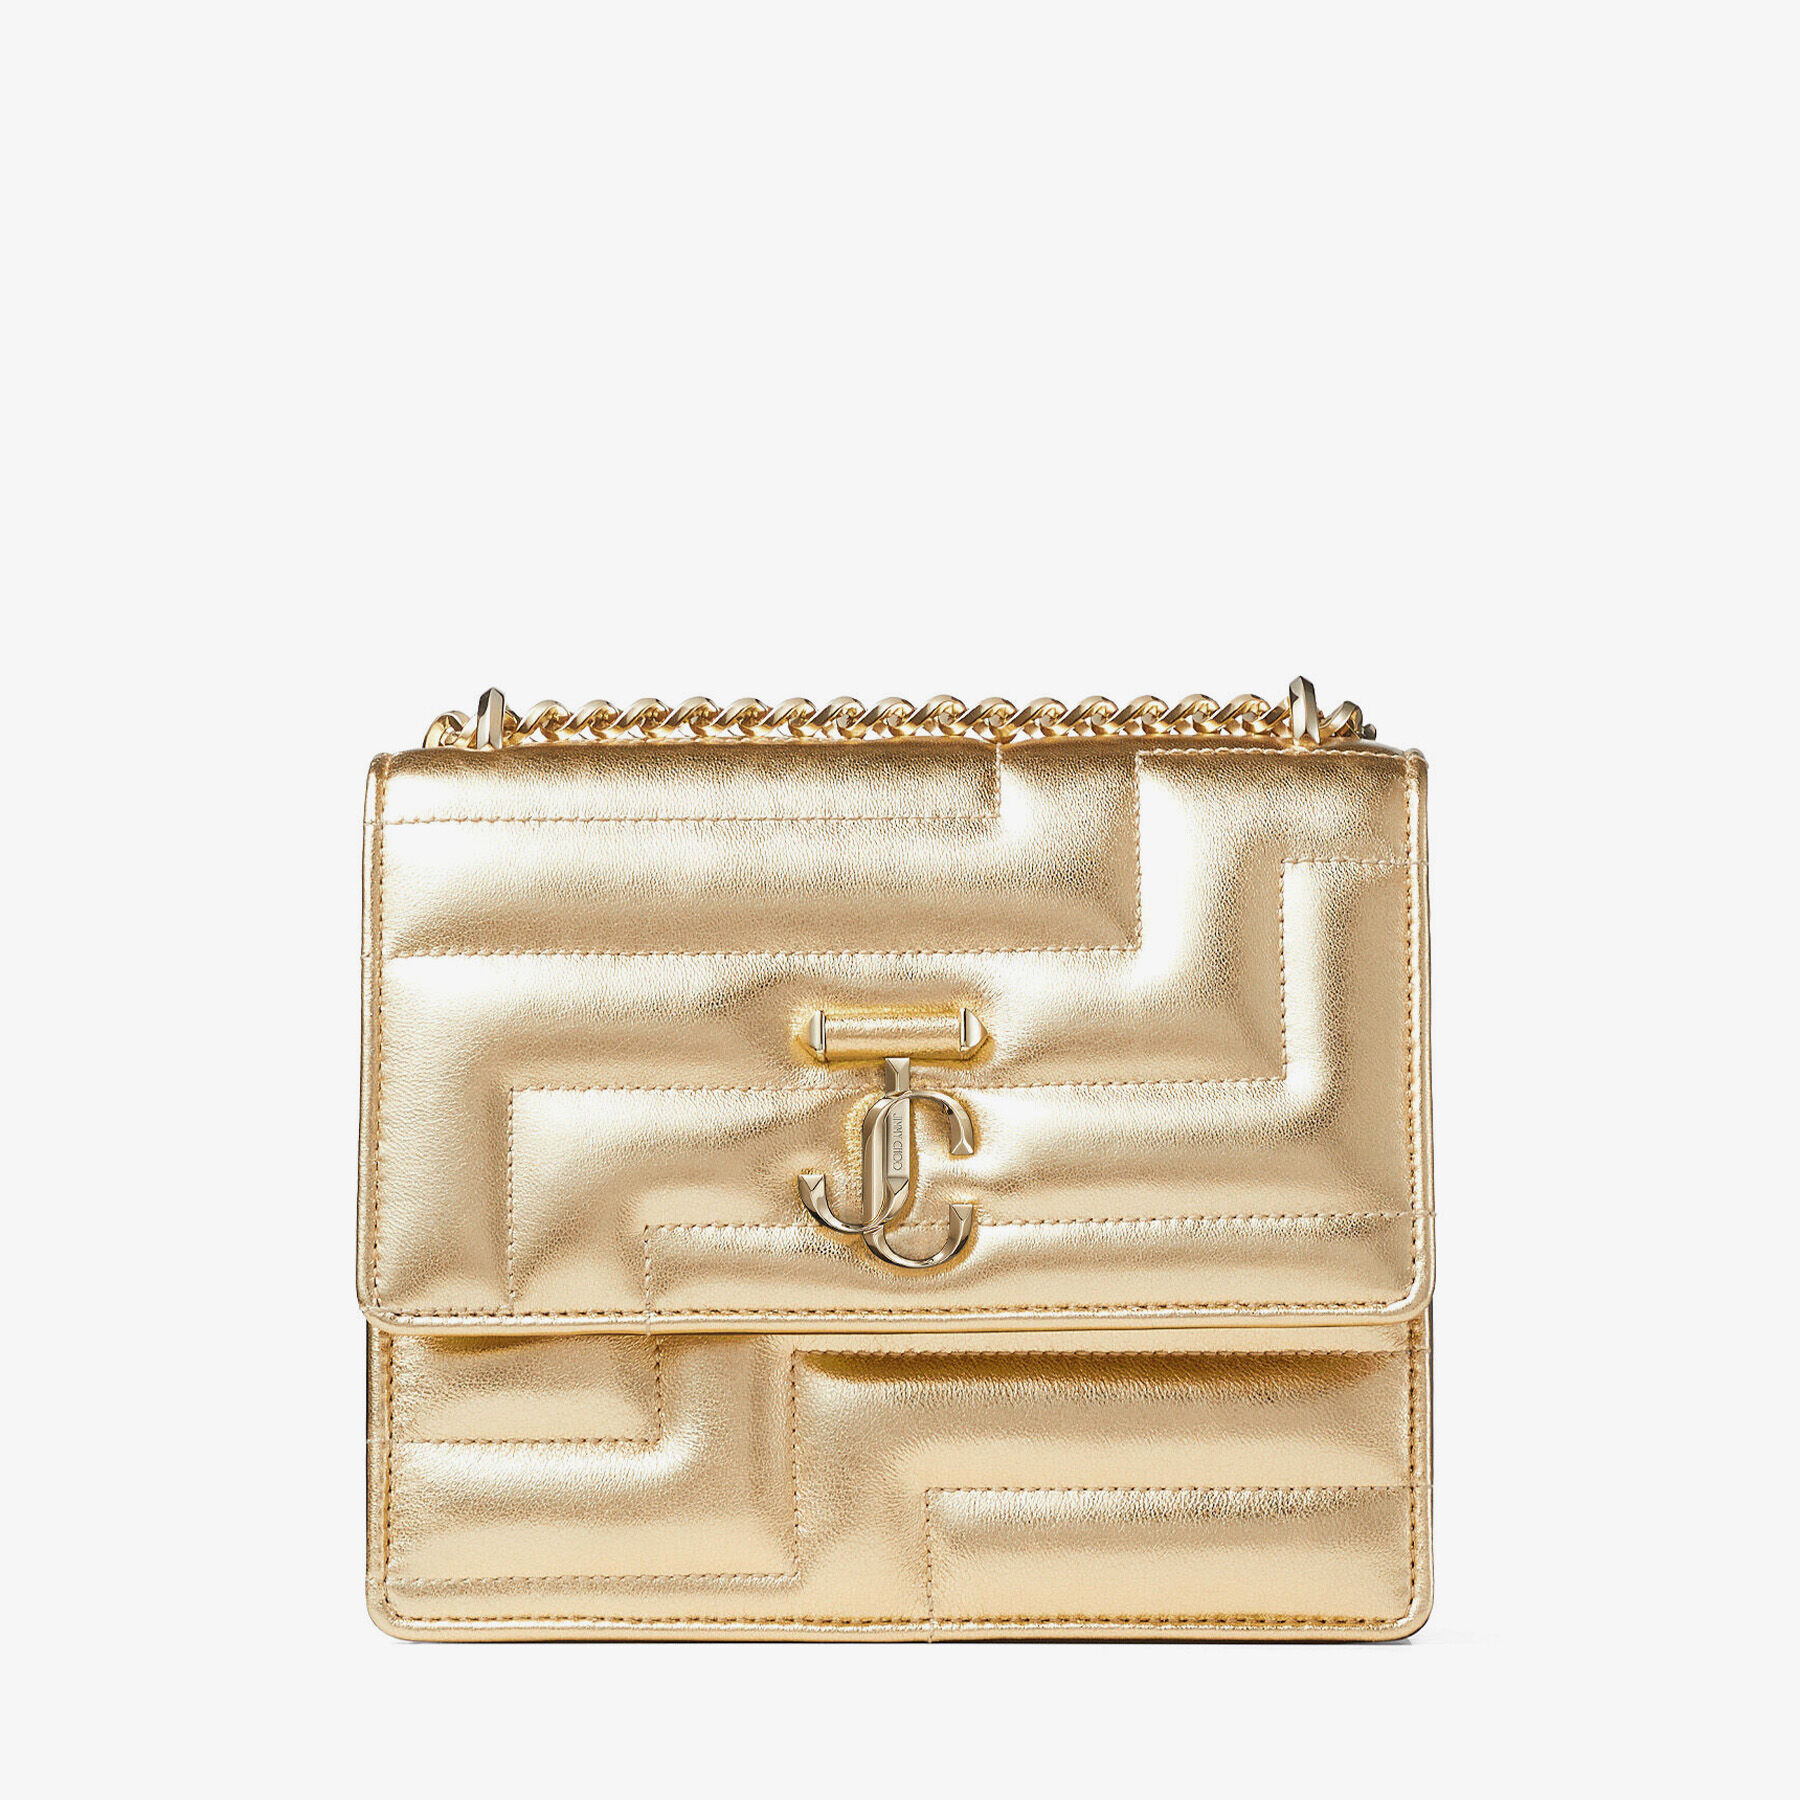 Gold Avenue Metallic Nappa Leather Bag with Light Gold JC Emblem 